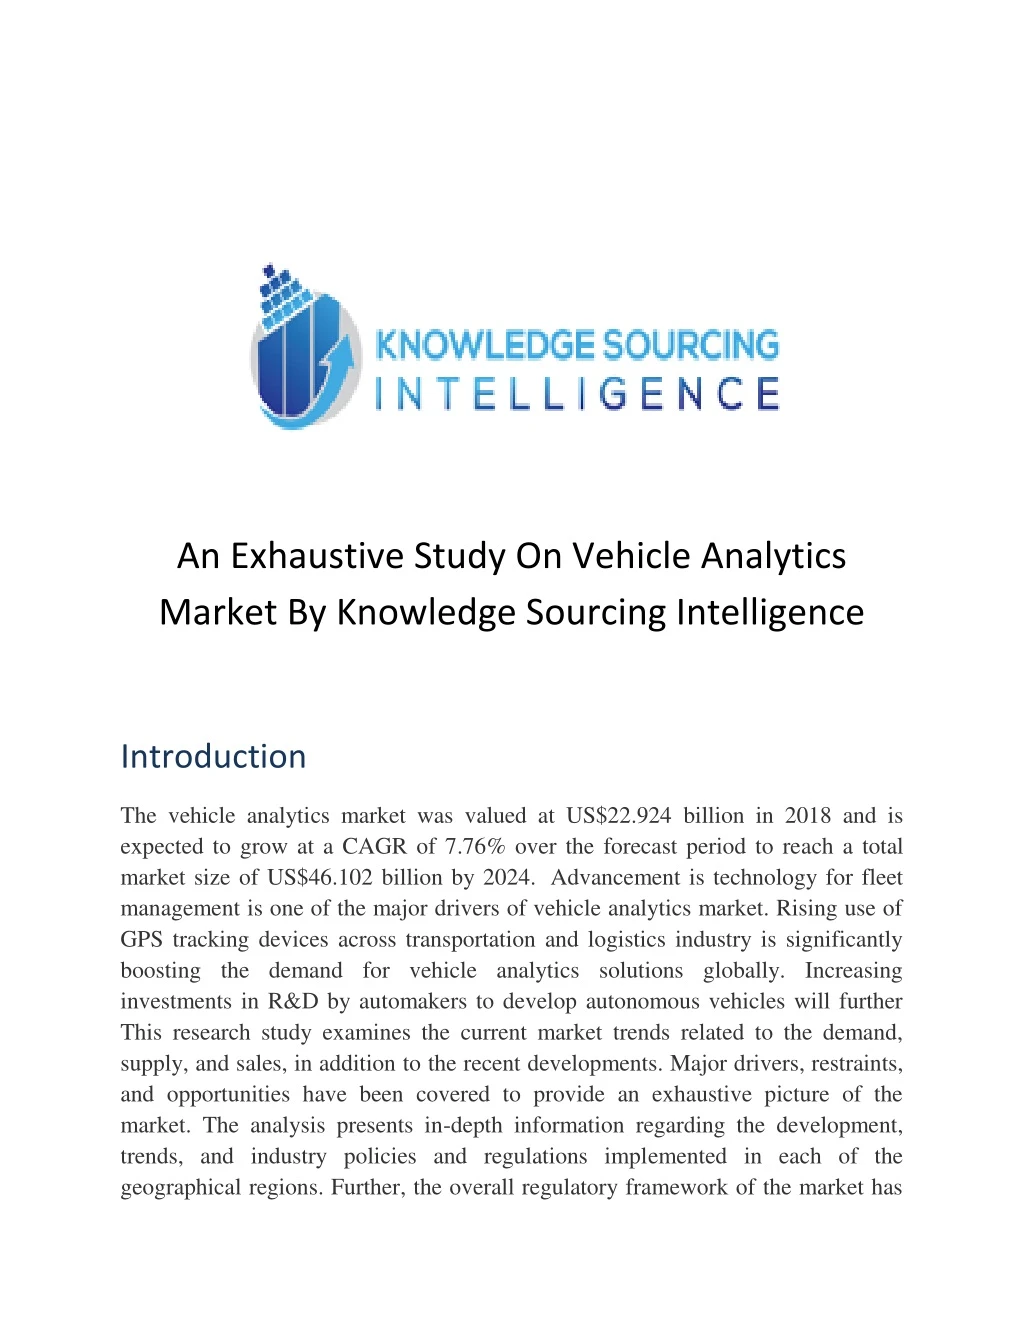 an exhaustive study on vehicle analytics market